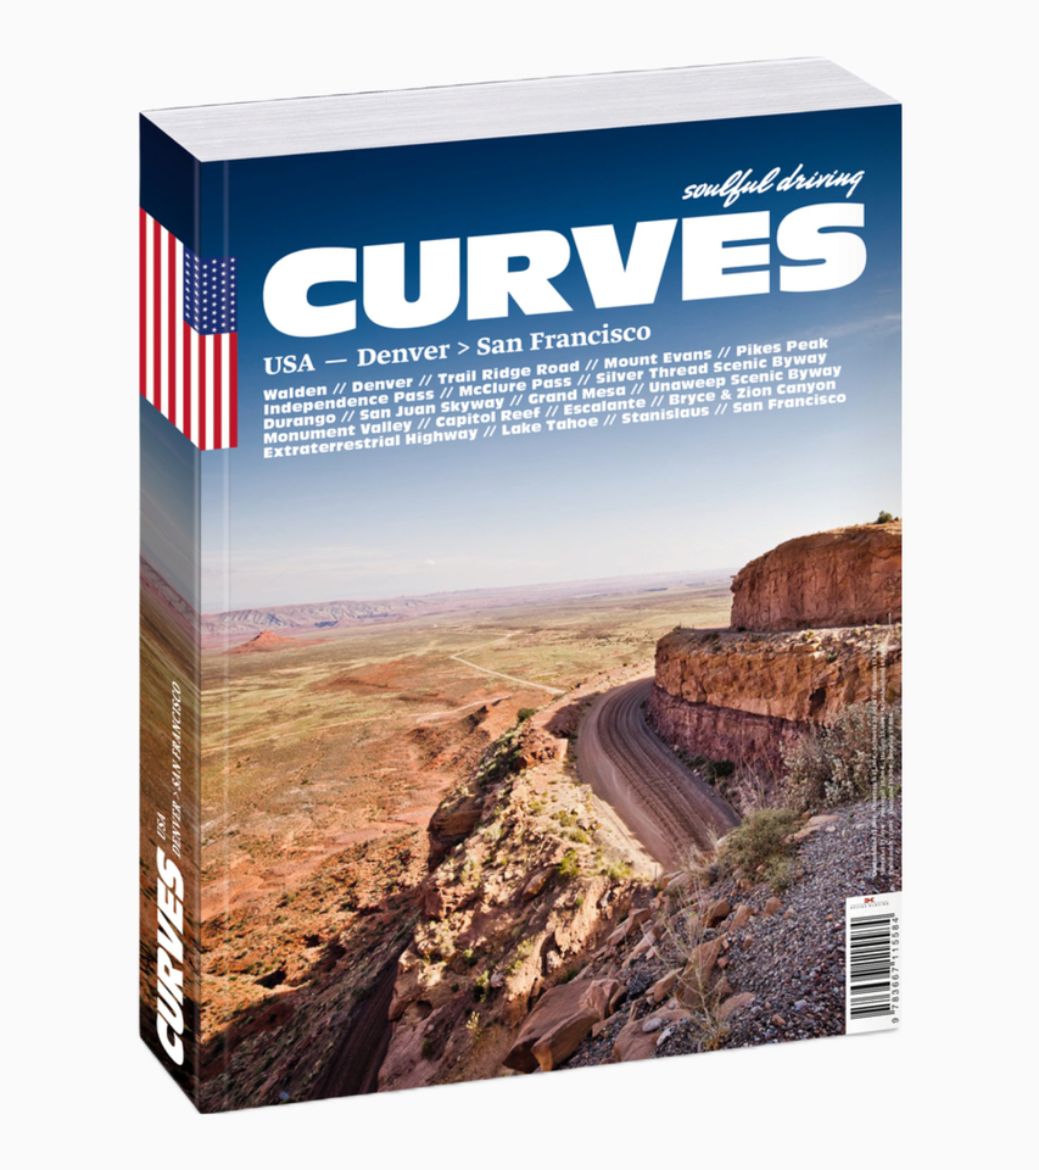 Picture of Curves USA - Denver - San Francisco